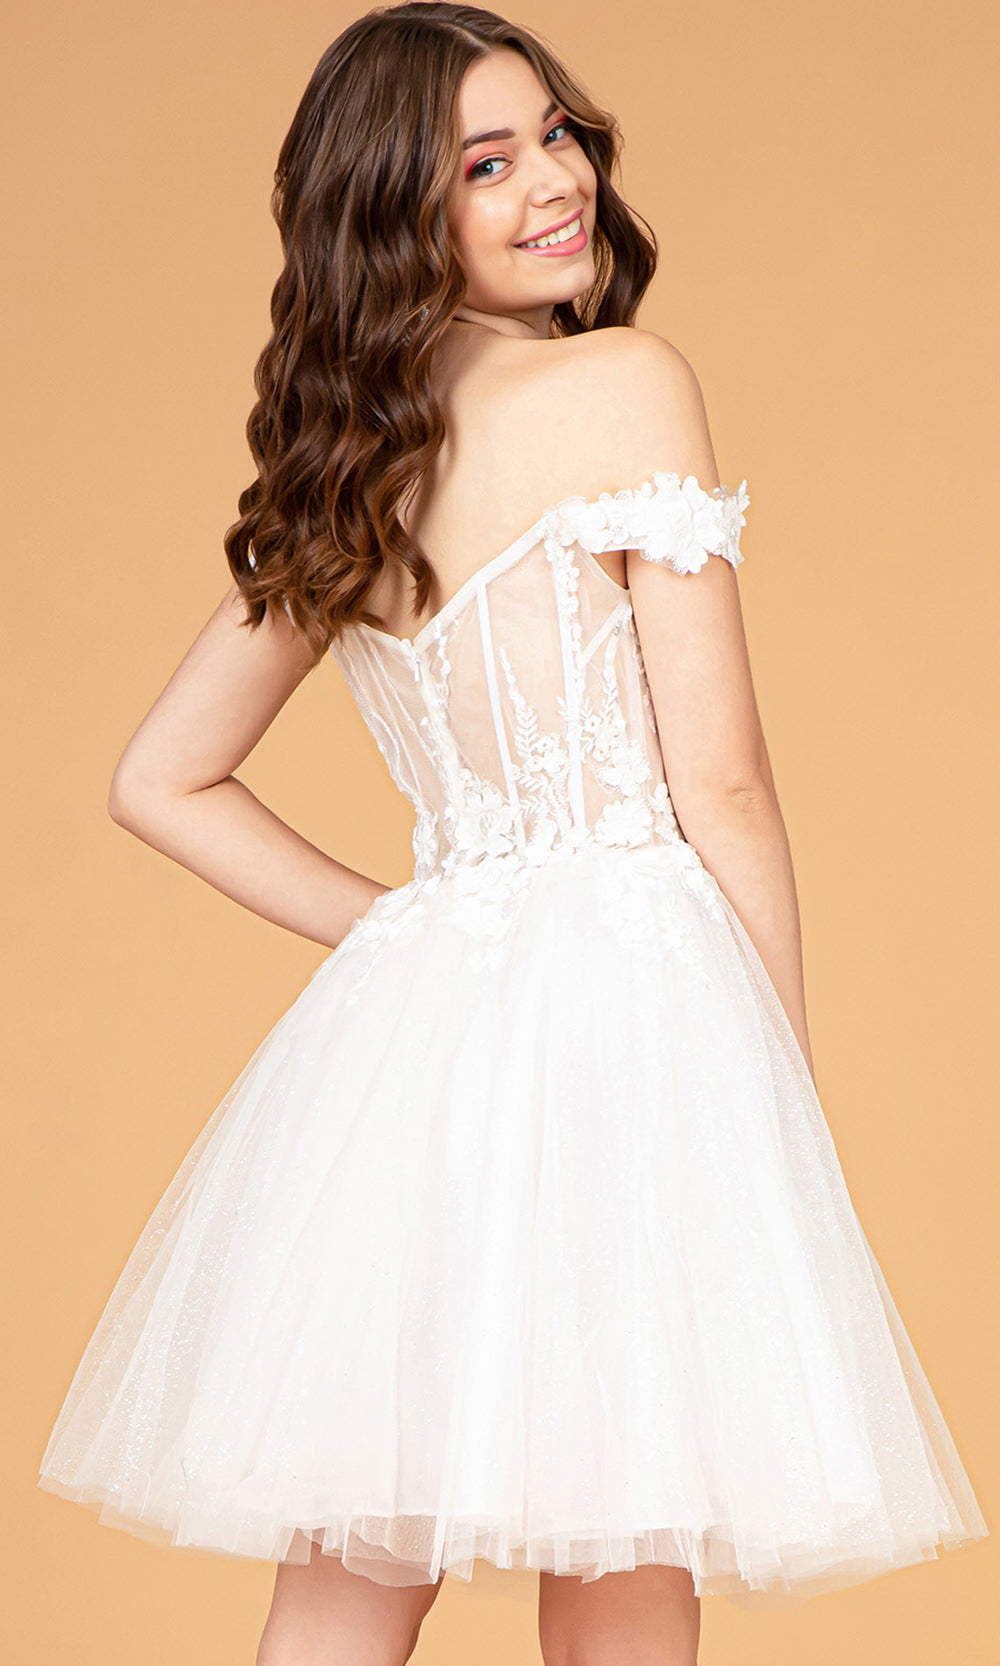 Elizabeth K GS3096 Whitegrade 8 grad dresses, graduation dresses